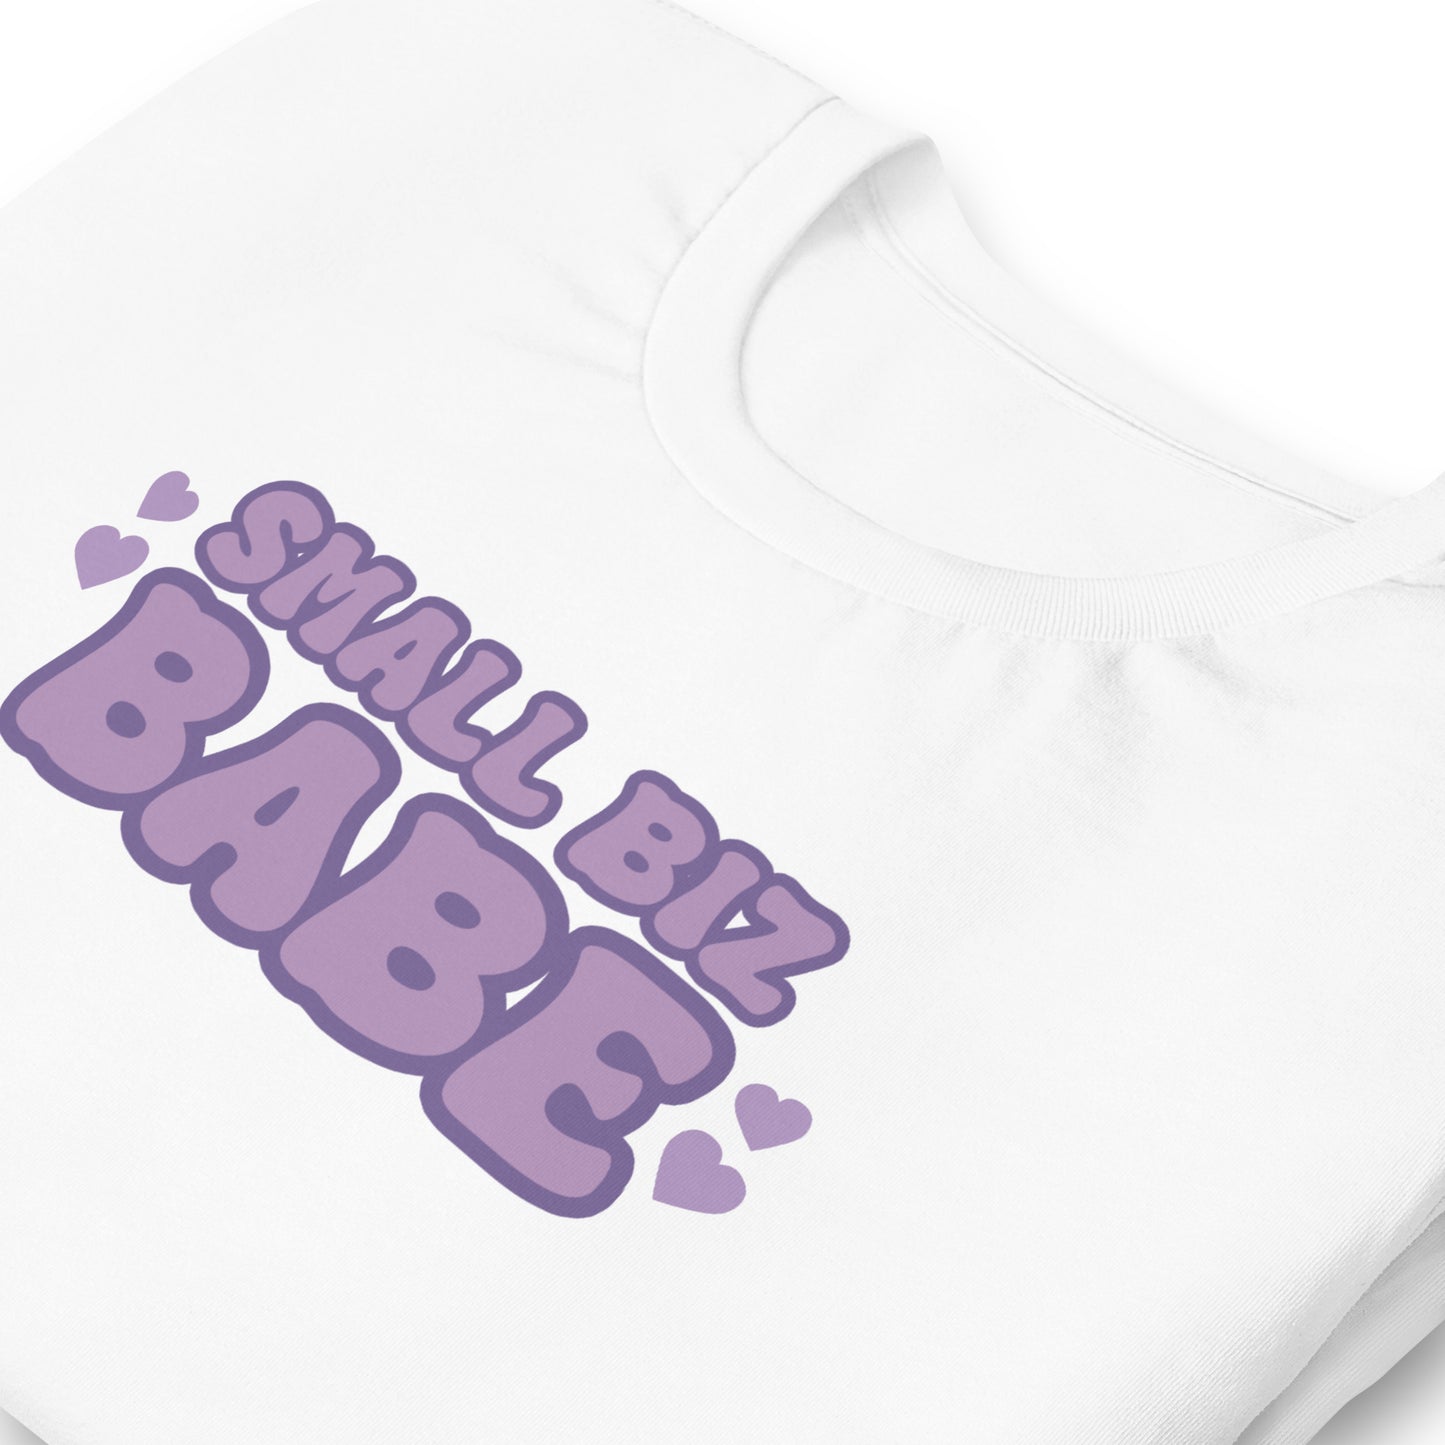 Small Biz Babe | T-Shirt | Regular Fit